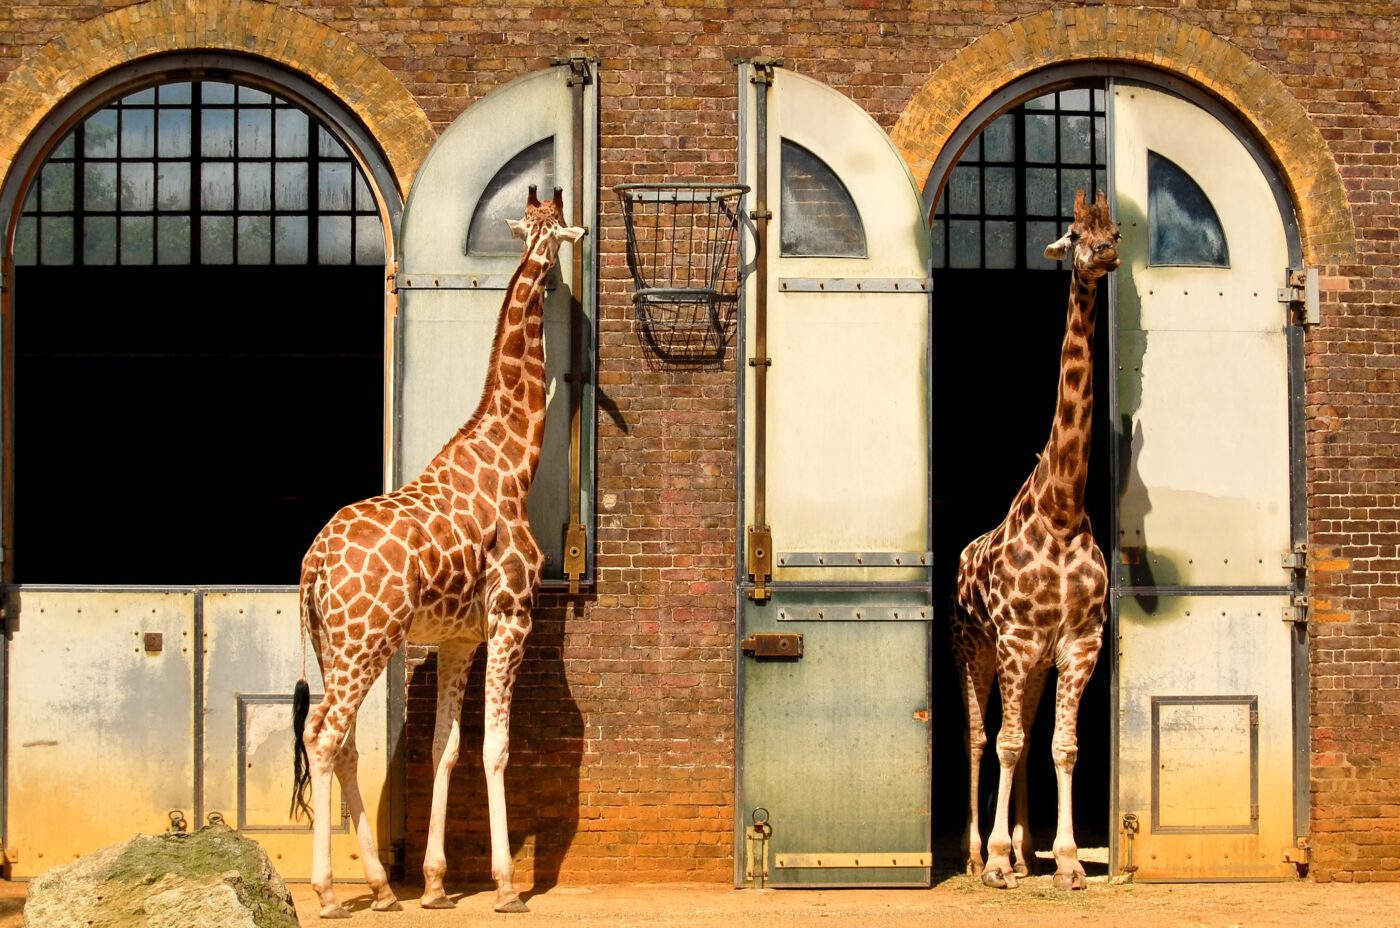 Giraffes at the ZSL London Zoo in Regent's Park